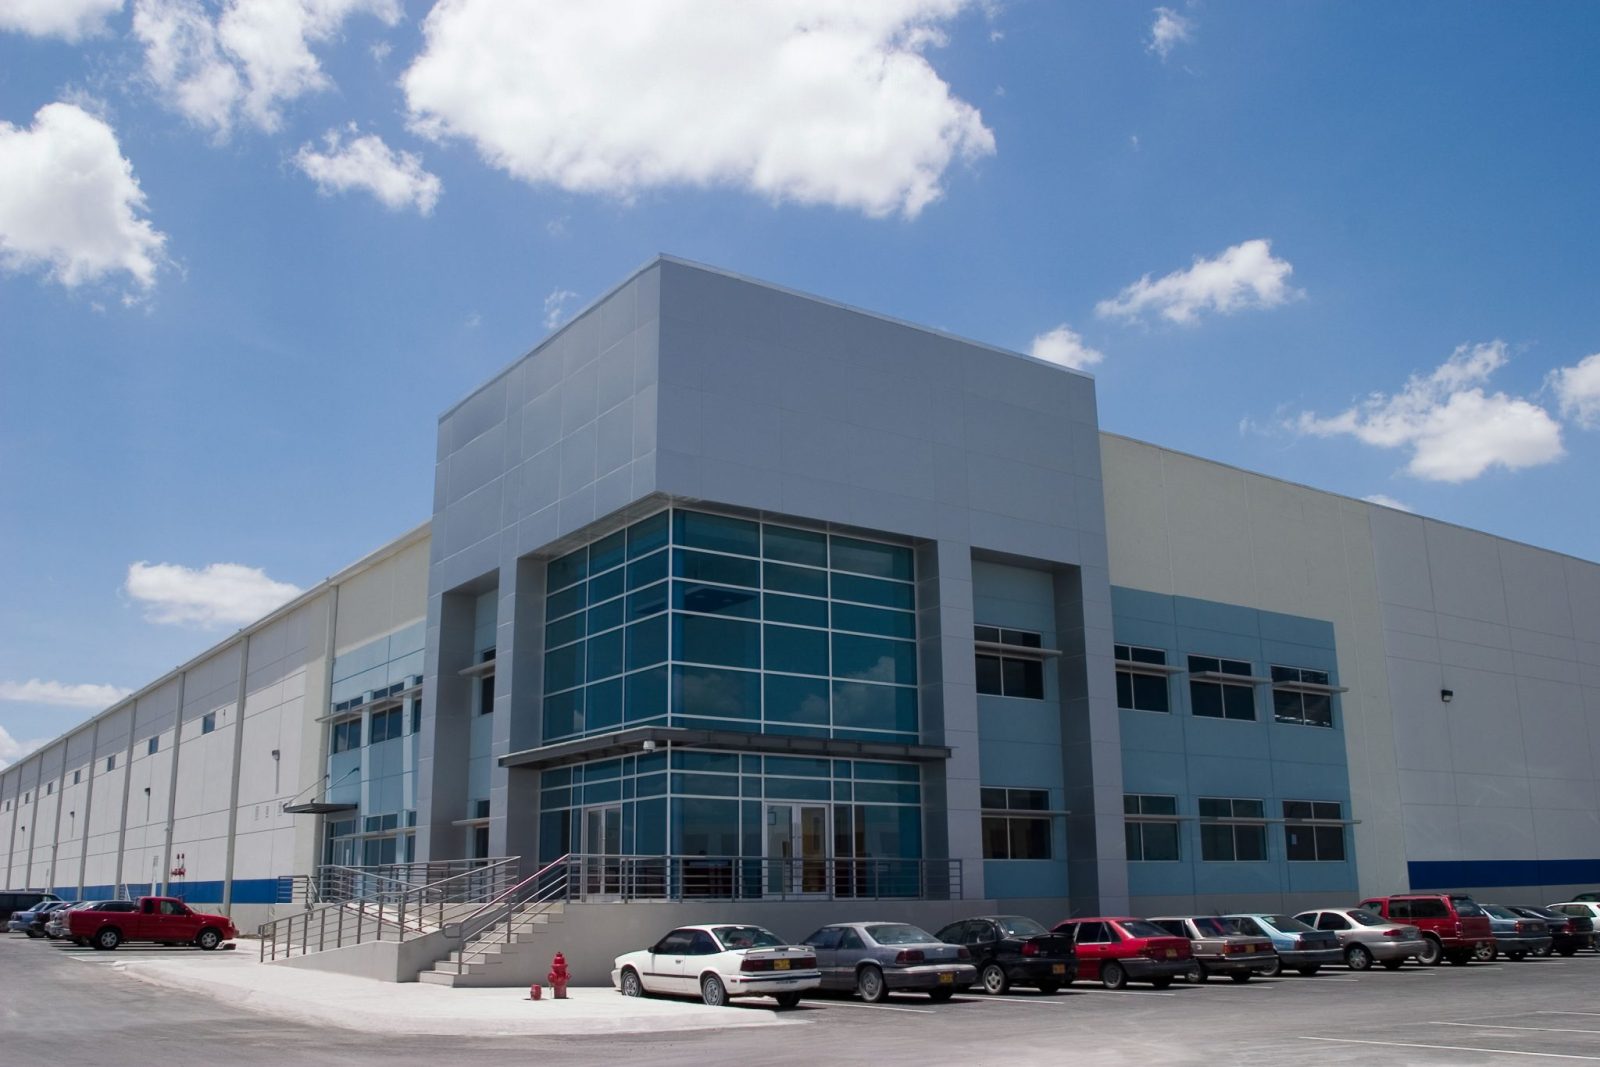 Eye level shot of Intermex 4 industrial facility in Reynosa, Tamaulipas.